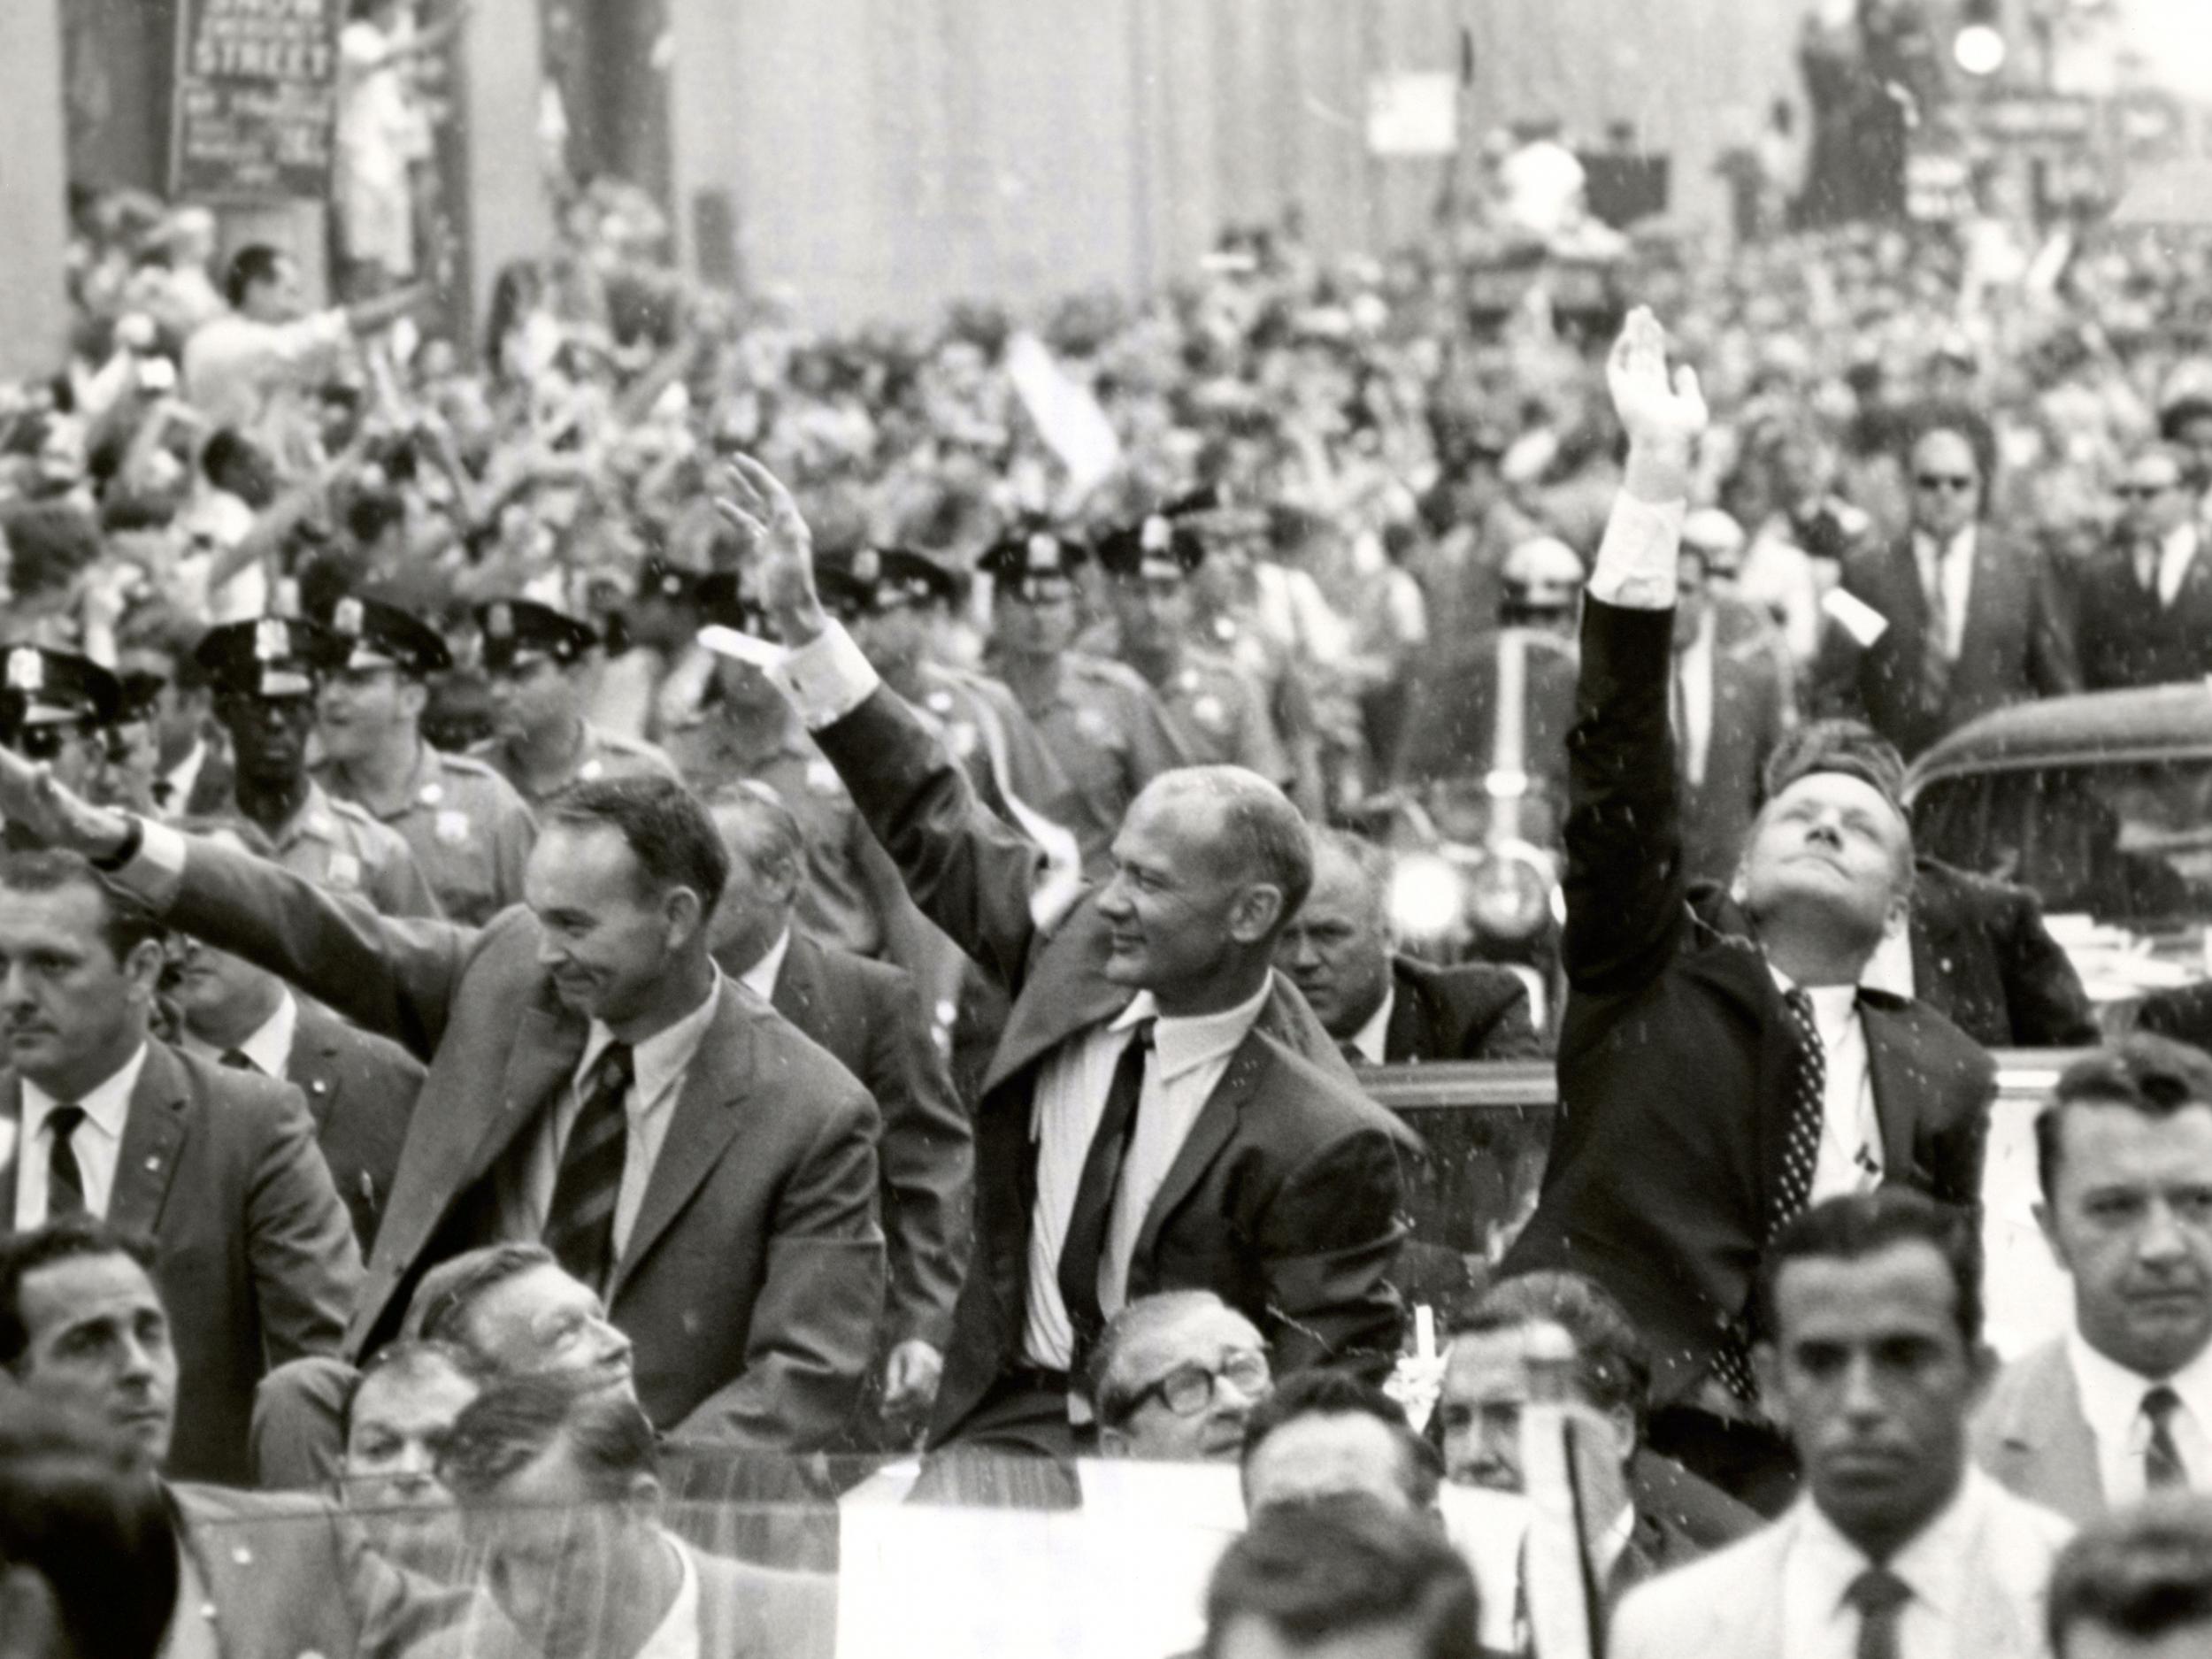 New York welcomes the Apollo 11 astronauts, 1969